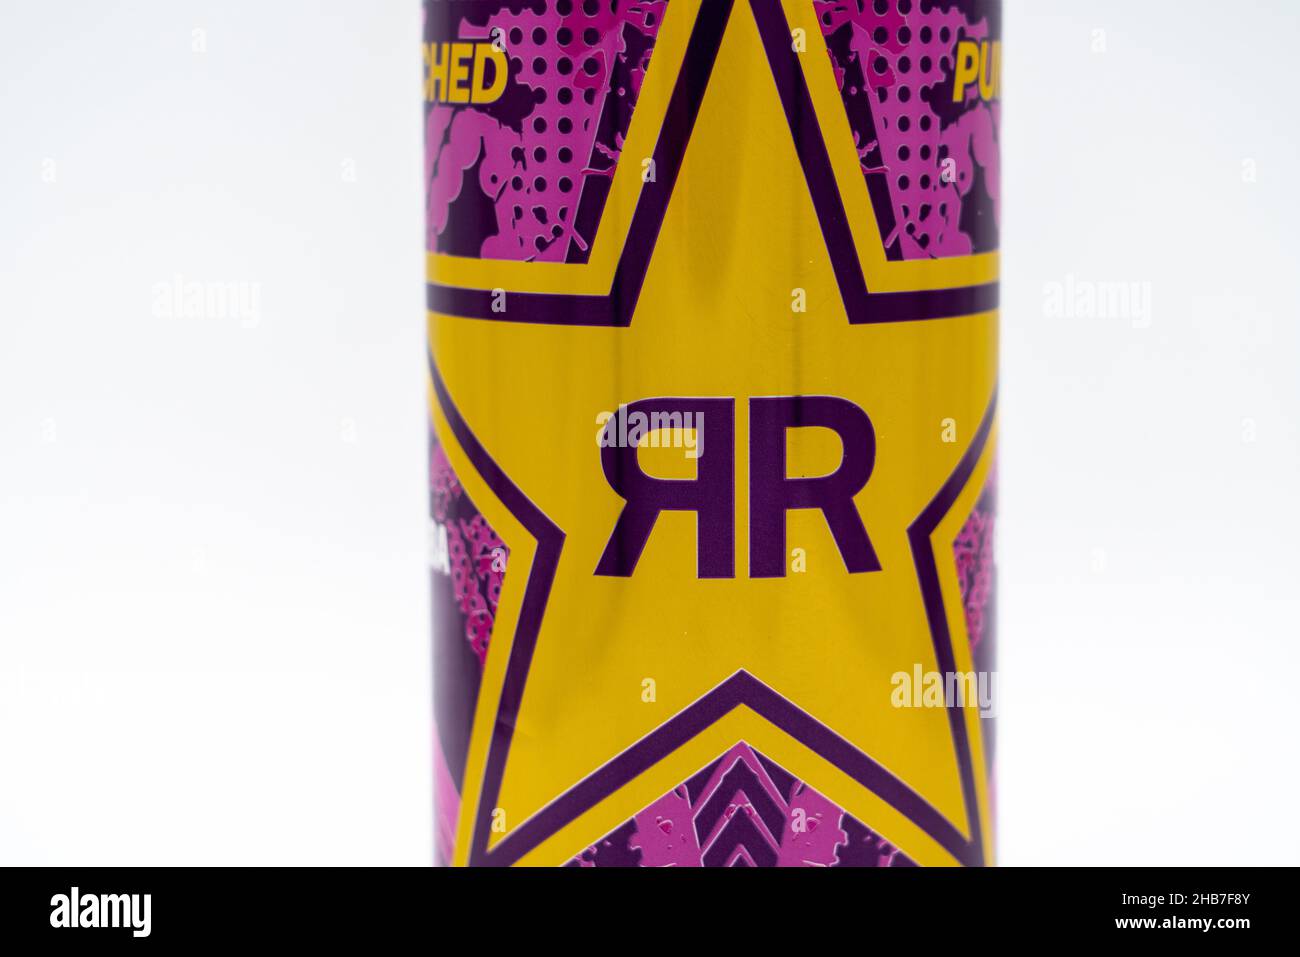 Barcelona, Spain - 12.17.2021: Rockstar energy drink aluminium can isolated on light background Stock Photo